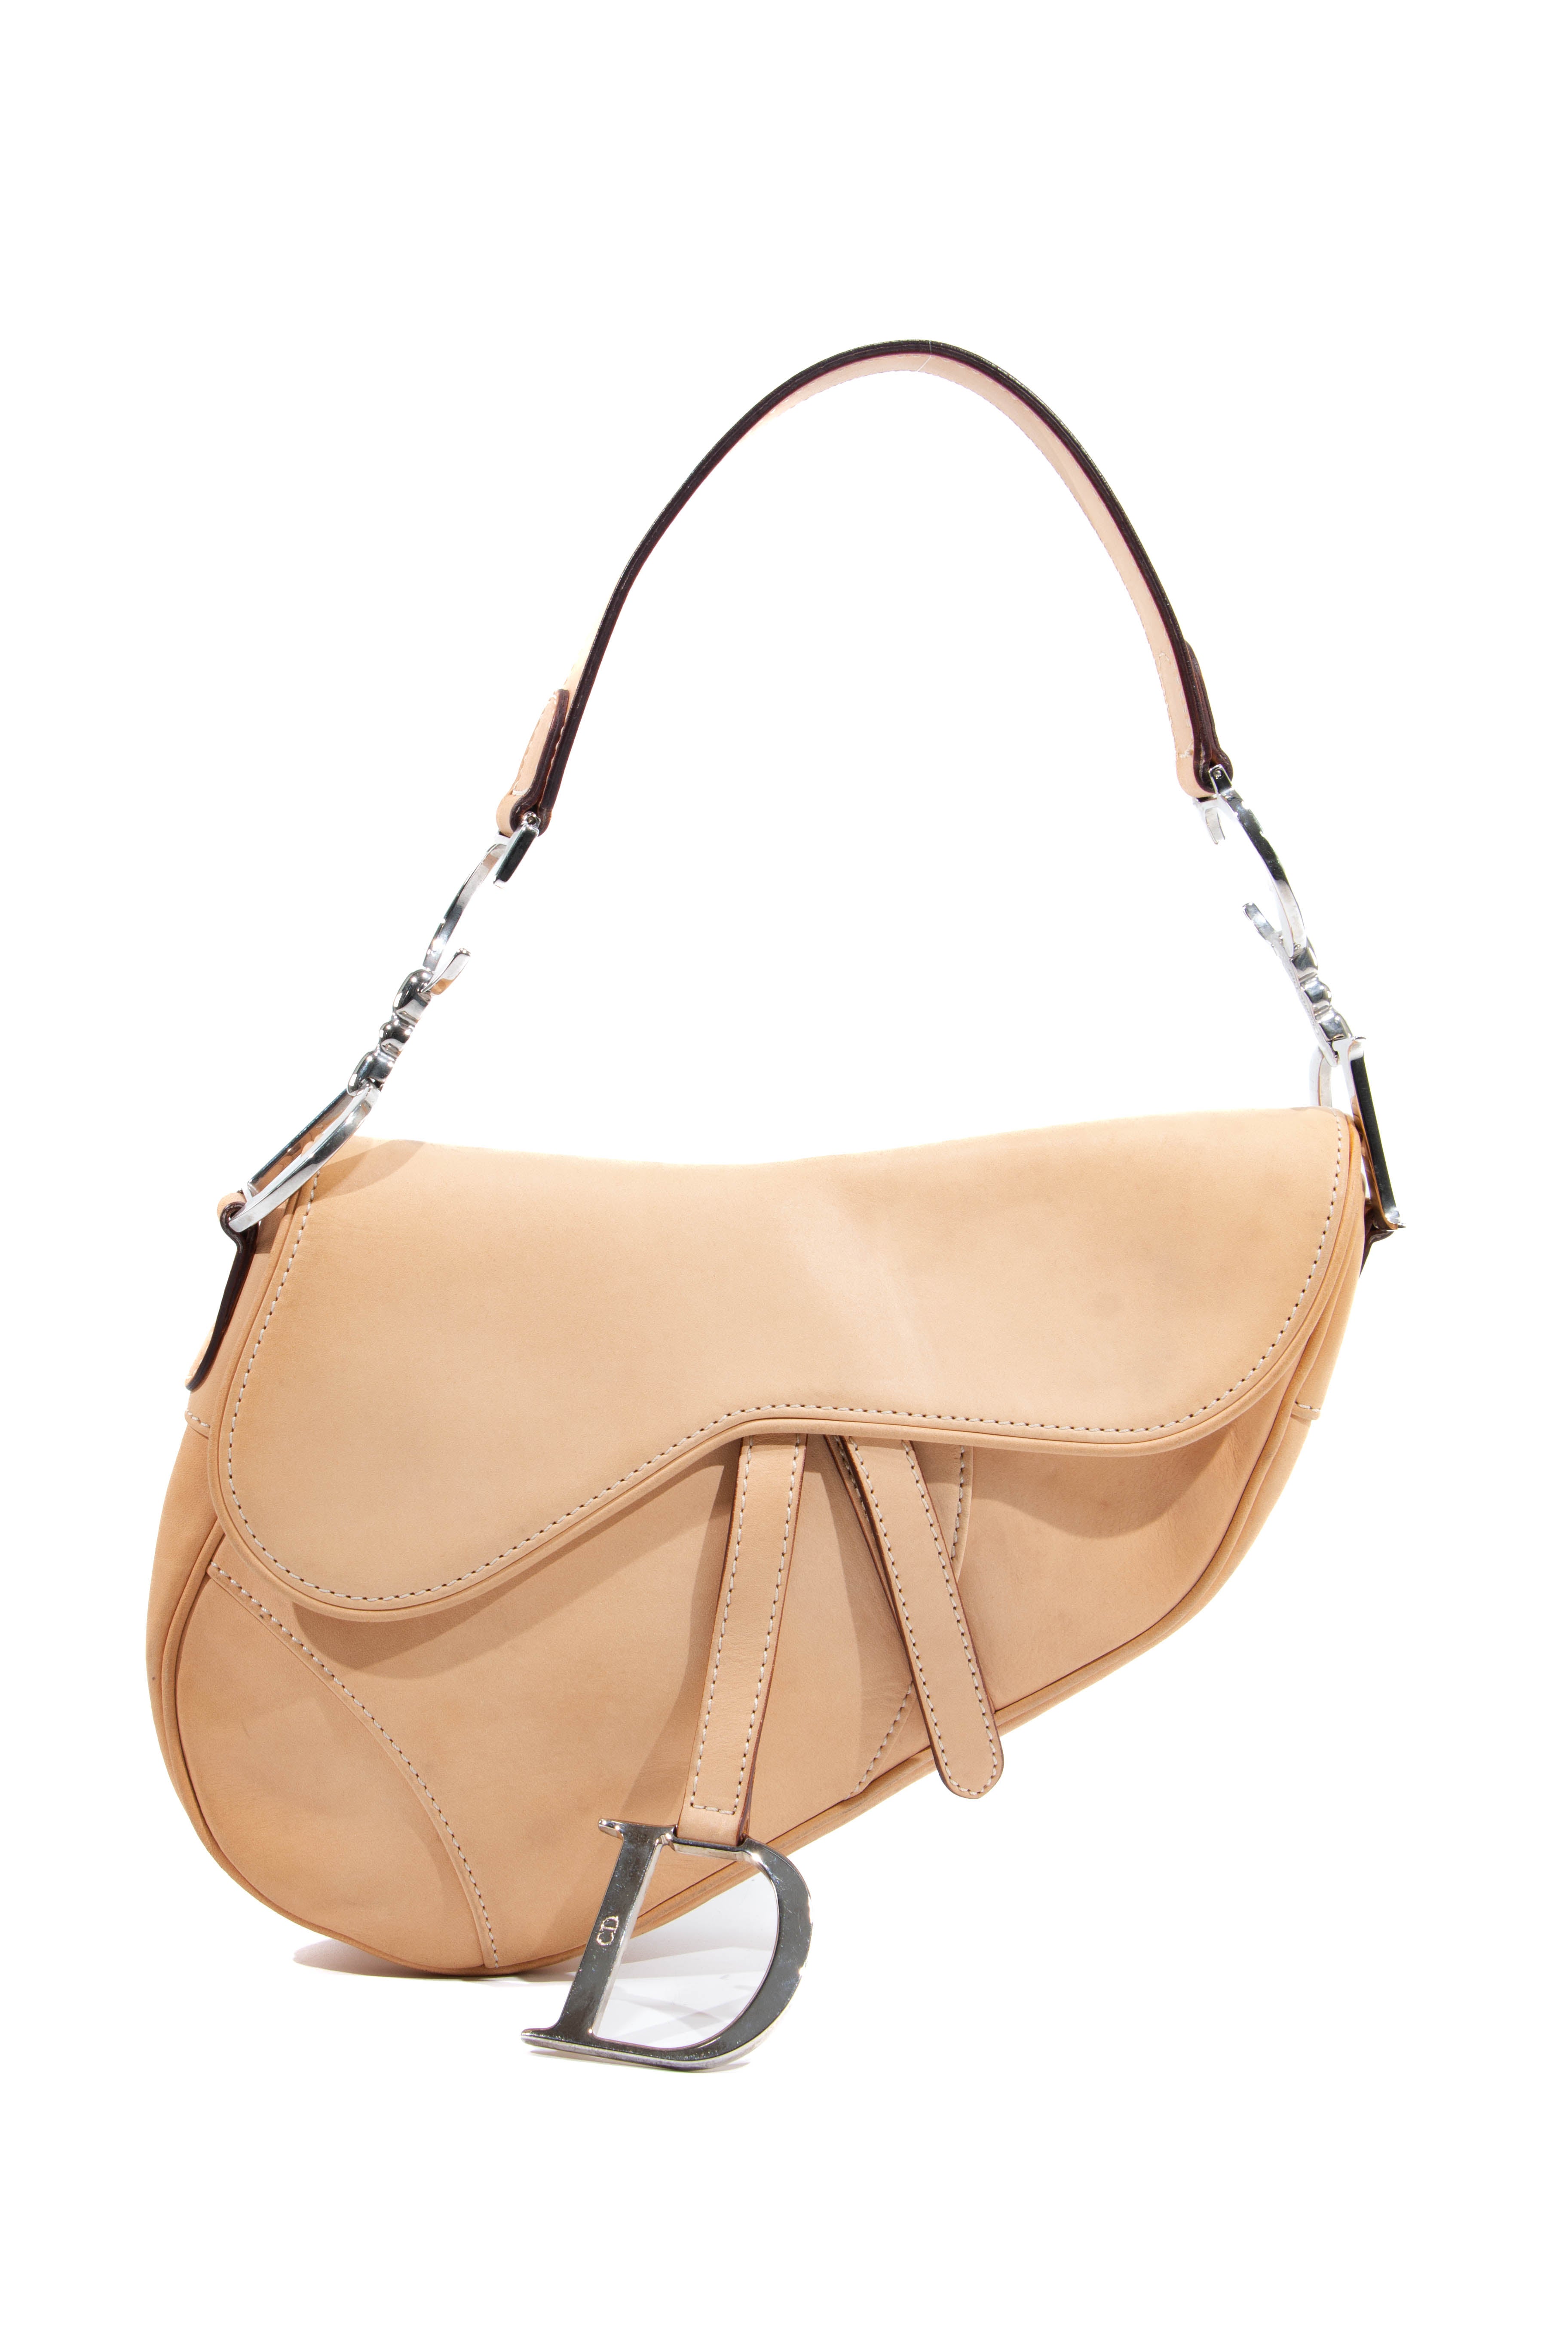 Dior Saddle Bag – Collectors cage